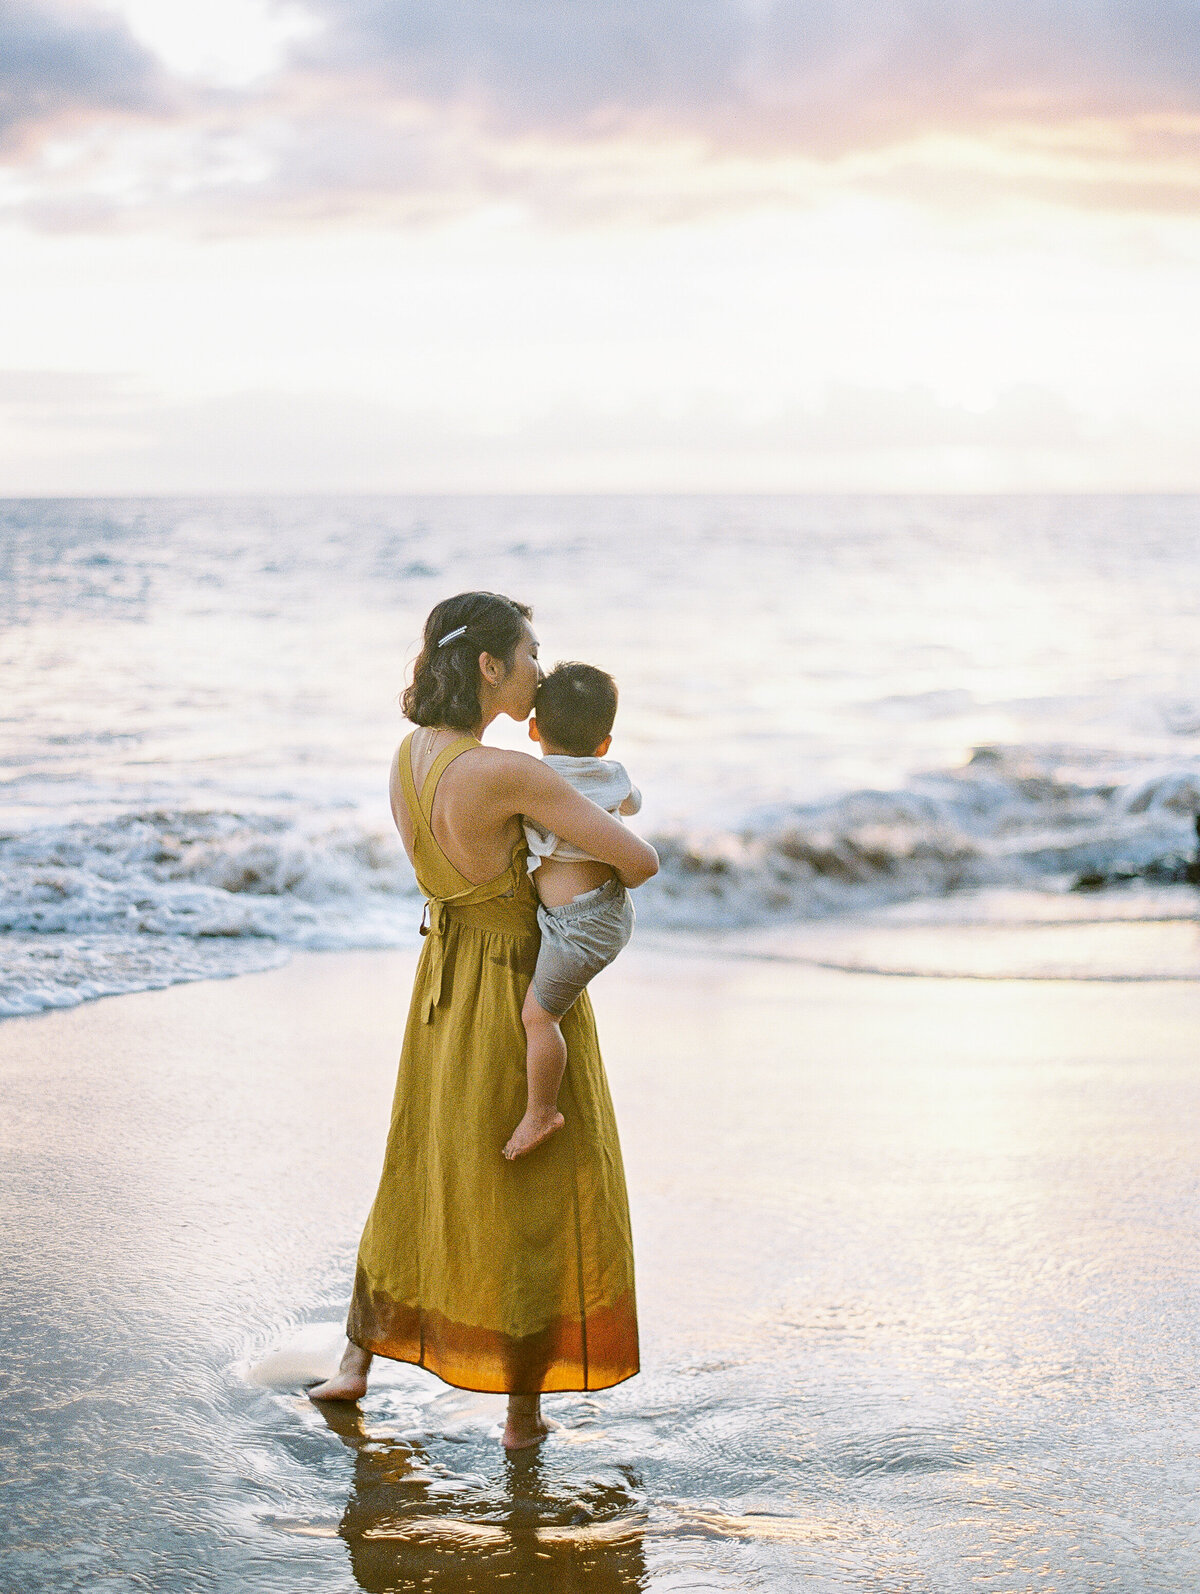 LeeFamily | Hawaii Wedding & Lifestyle Photography | Ashley Goodwin Photography